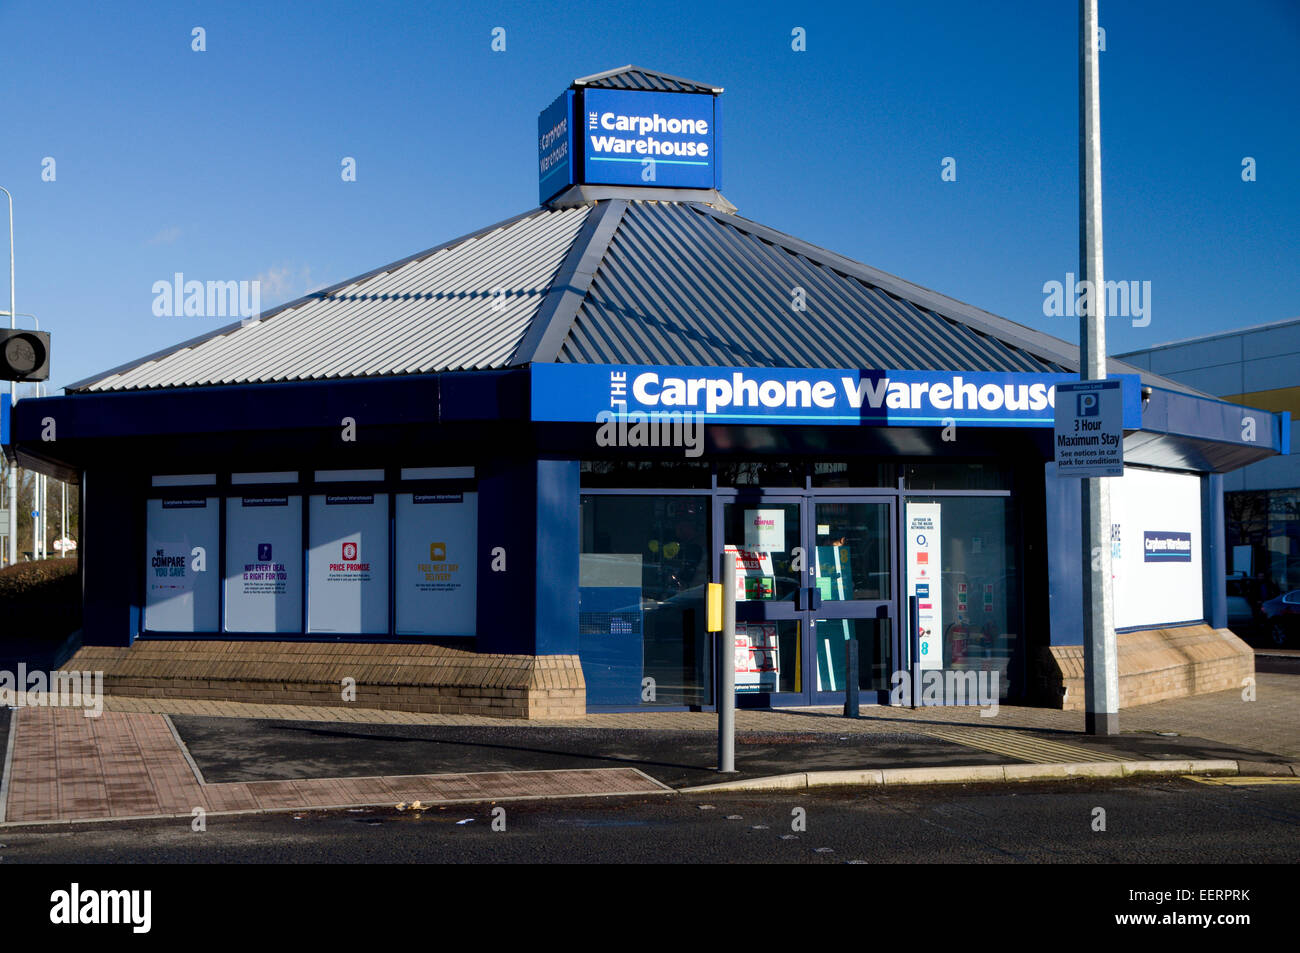 Carphone Warehouse Booth, Newport Road, Cardiff, Wales. Stock Photo